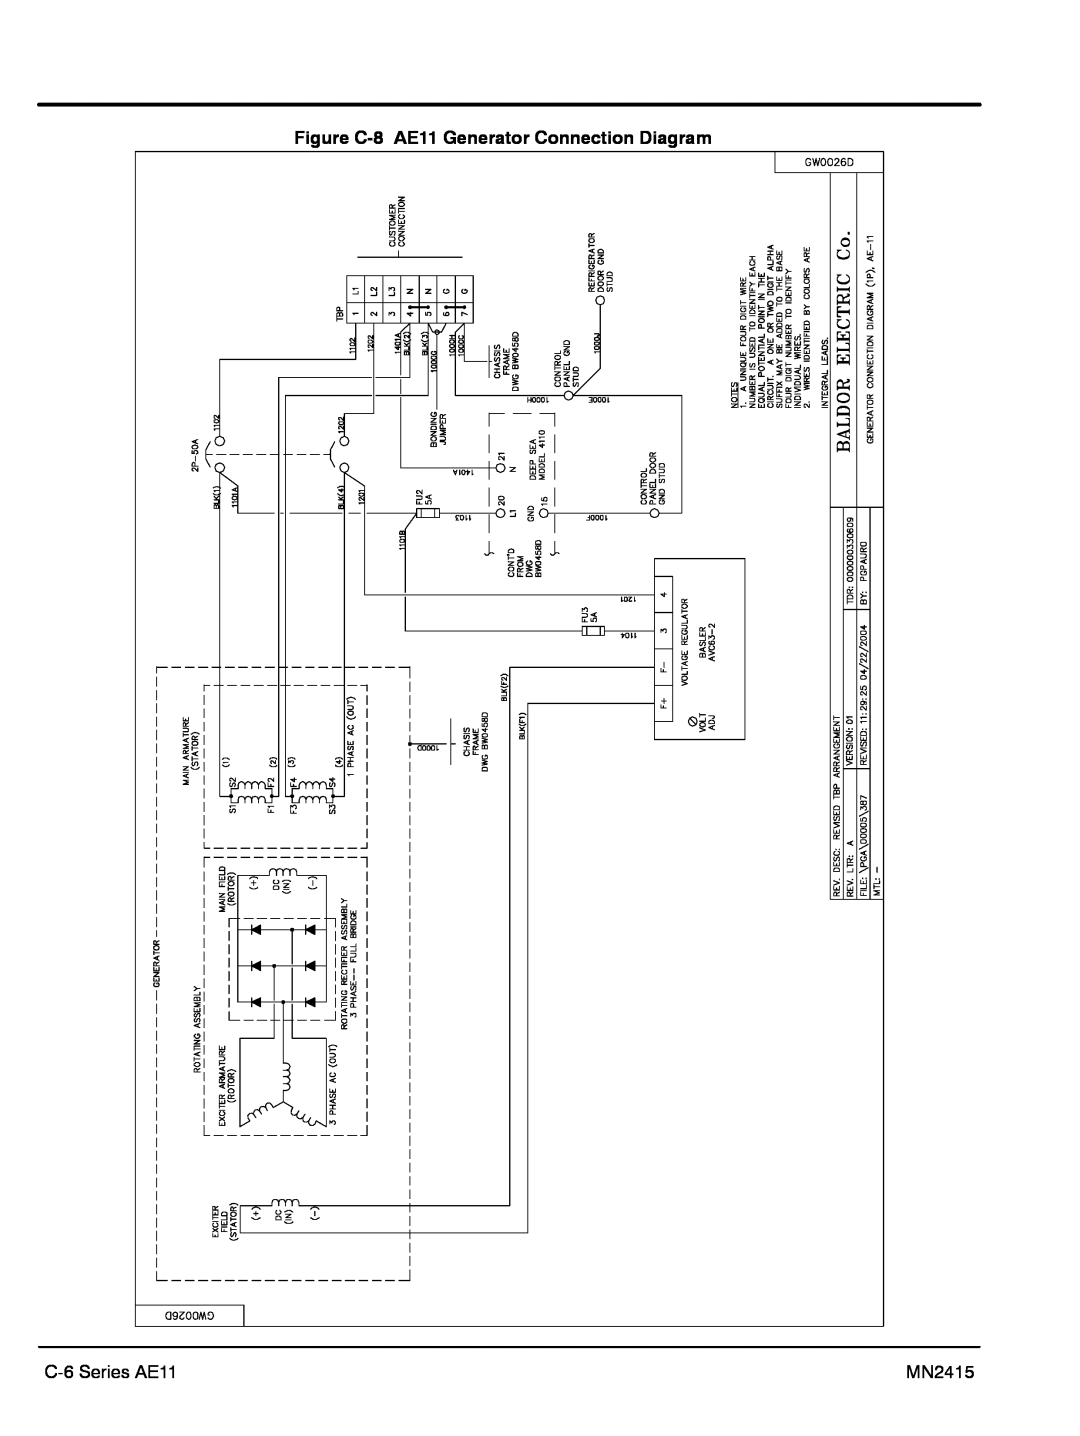 Baldor AE25, AE10, AE8 manual Figure C-8 AE11 Generator Connection Diagram, C-6 Series AE11, MN2415 